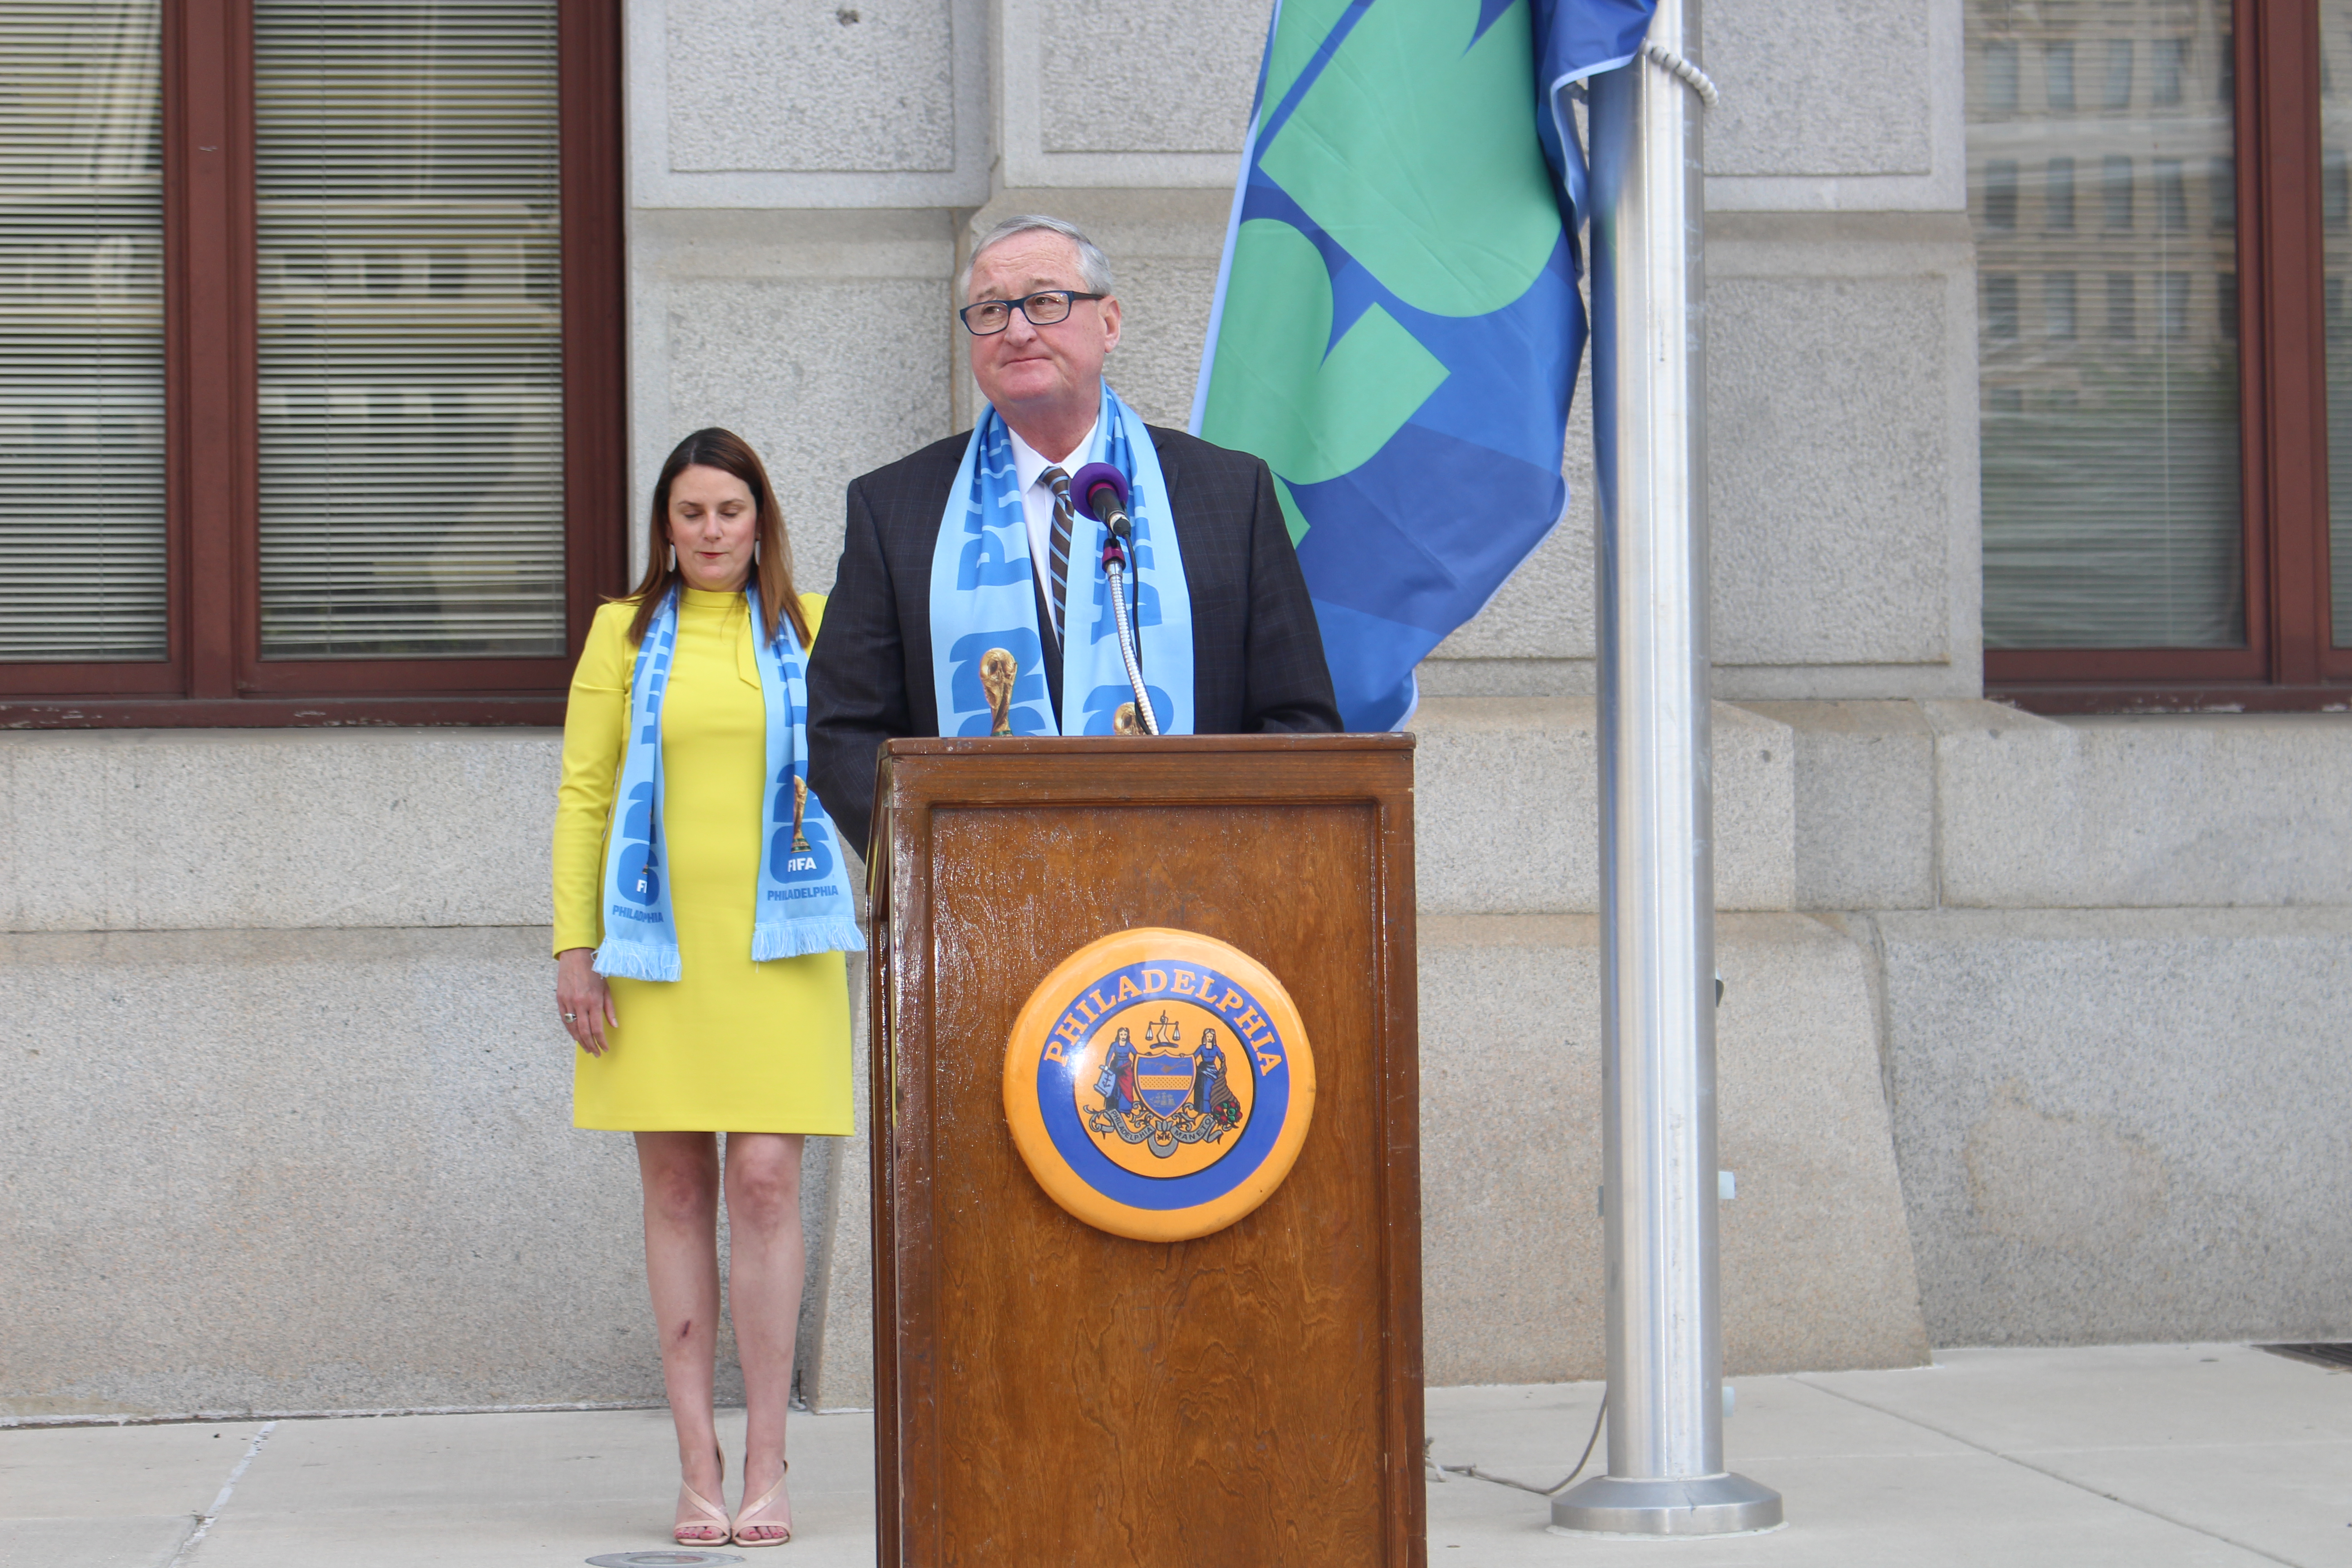 Mayor Jim Kenney speaks during the flag raising. Photo: Jensen Toussaint/AL DÍA News.